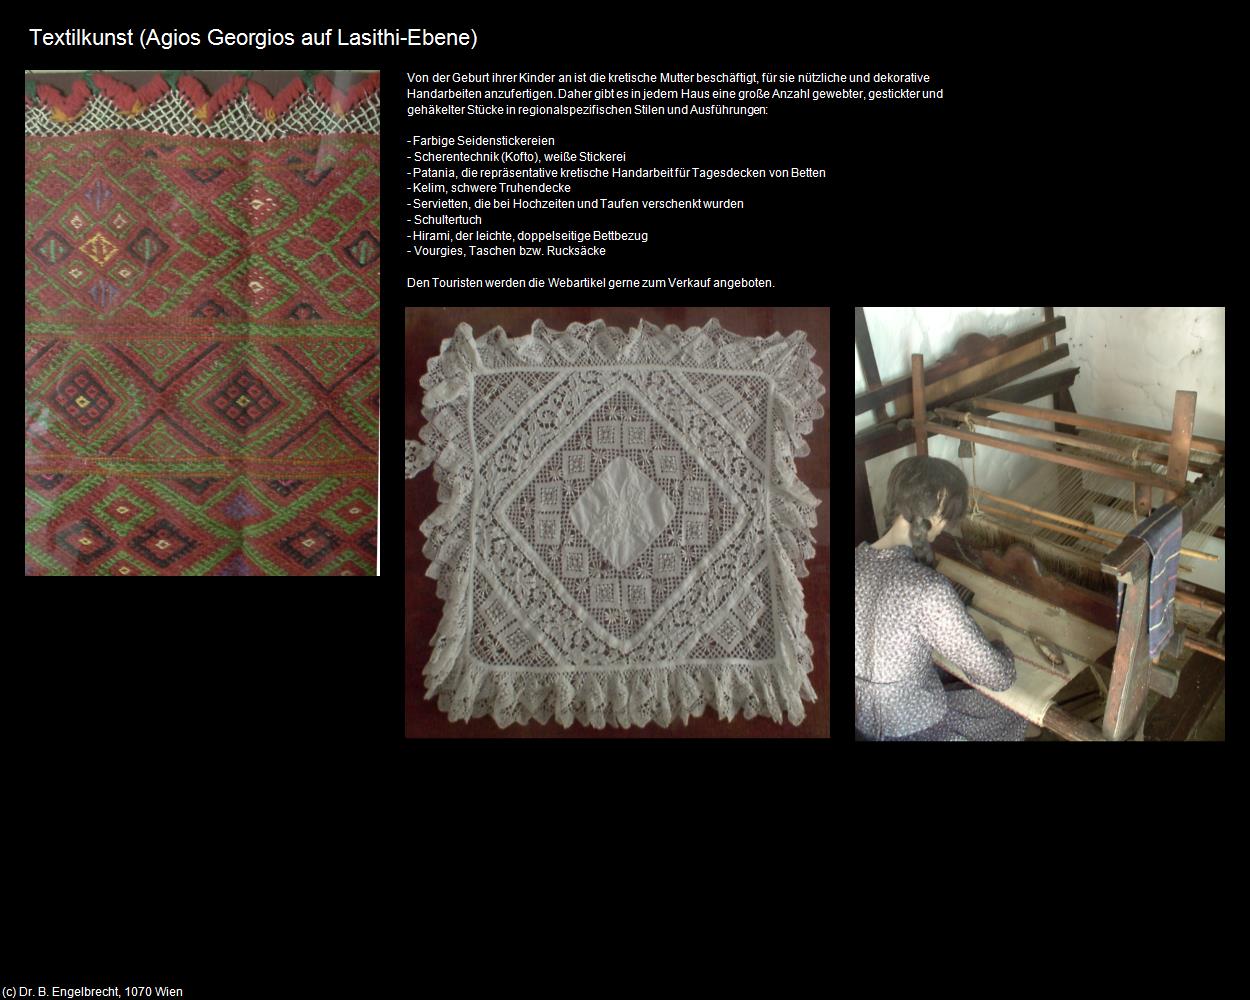 Textilkunst (Agios Georgios) (Lasithi-Ebene) in KRETA und SANTORIN